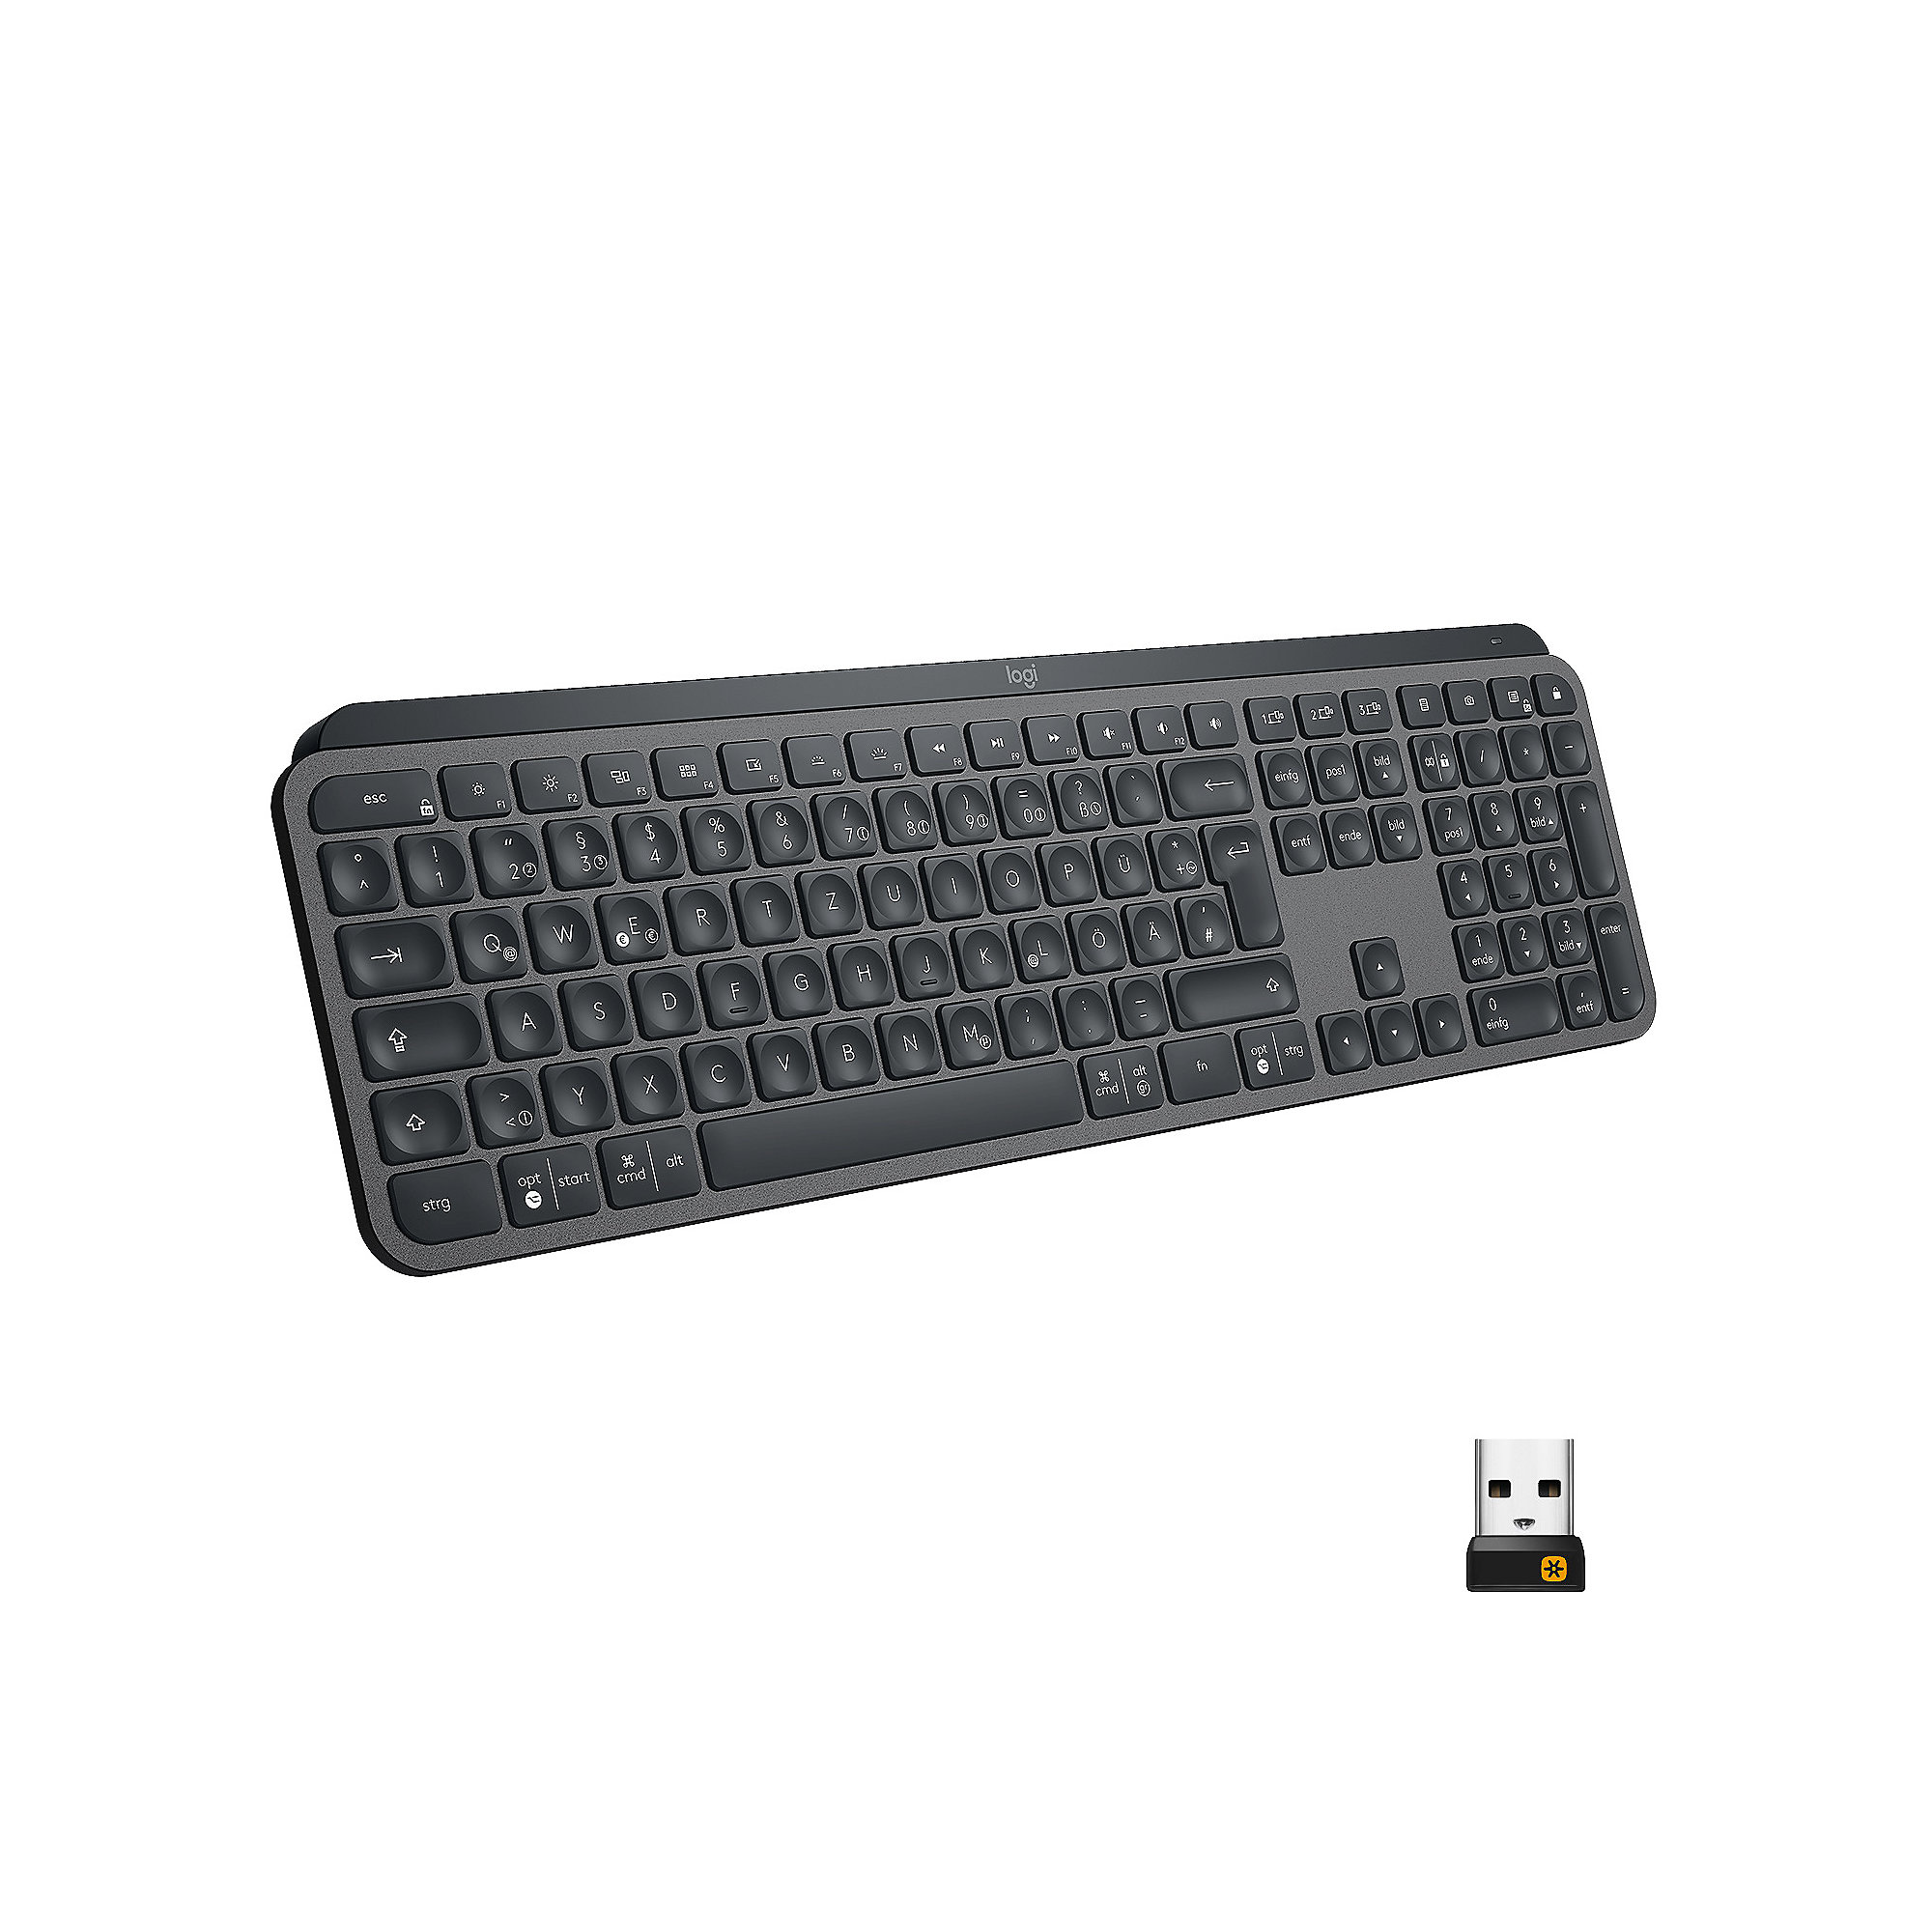 cyberport.de | Logitech MX Keys Advanced Illuminated Wireless Keyboard Graphite